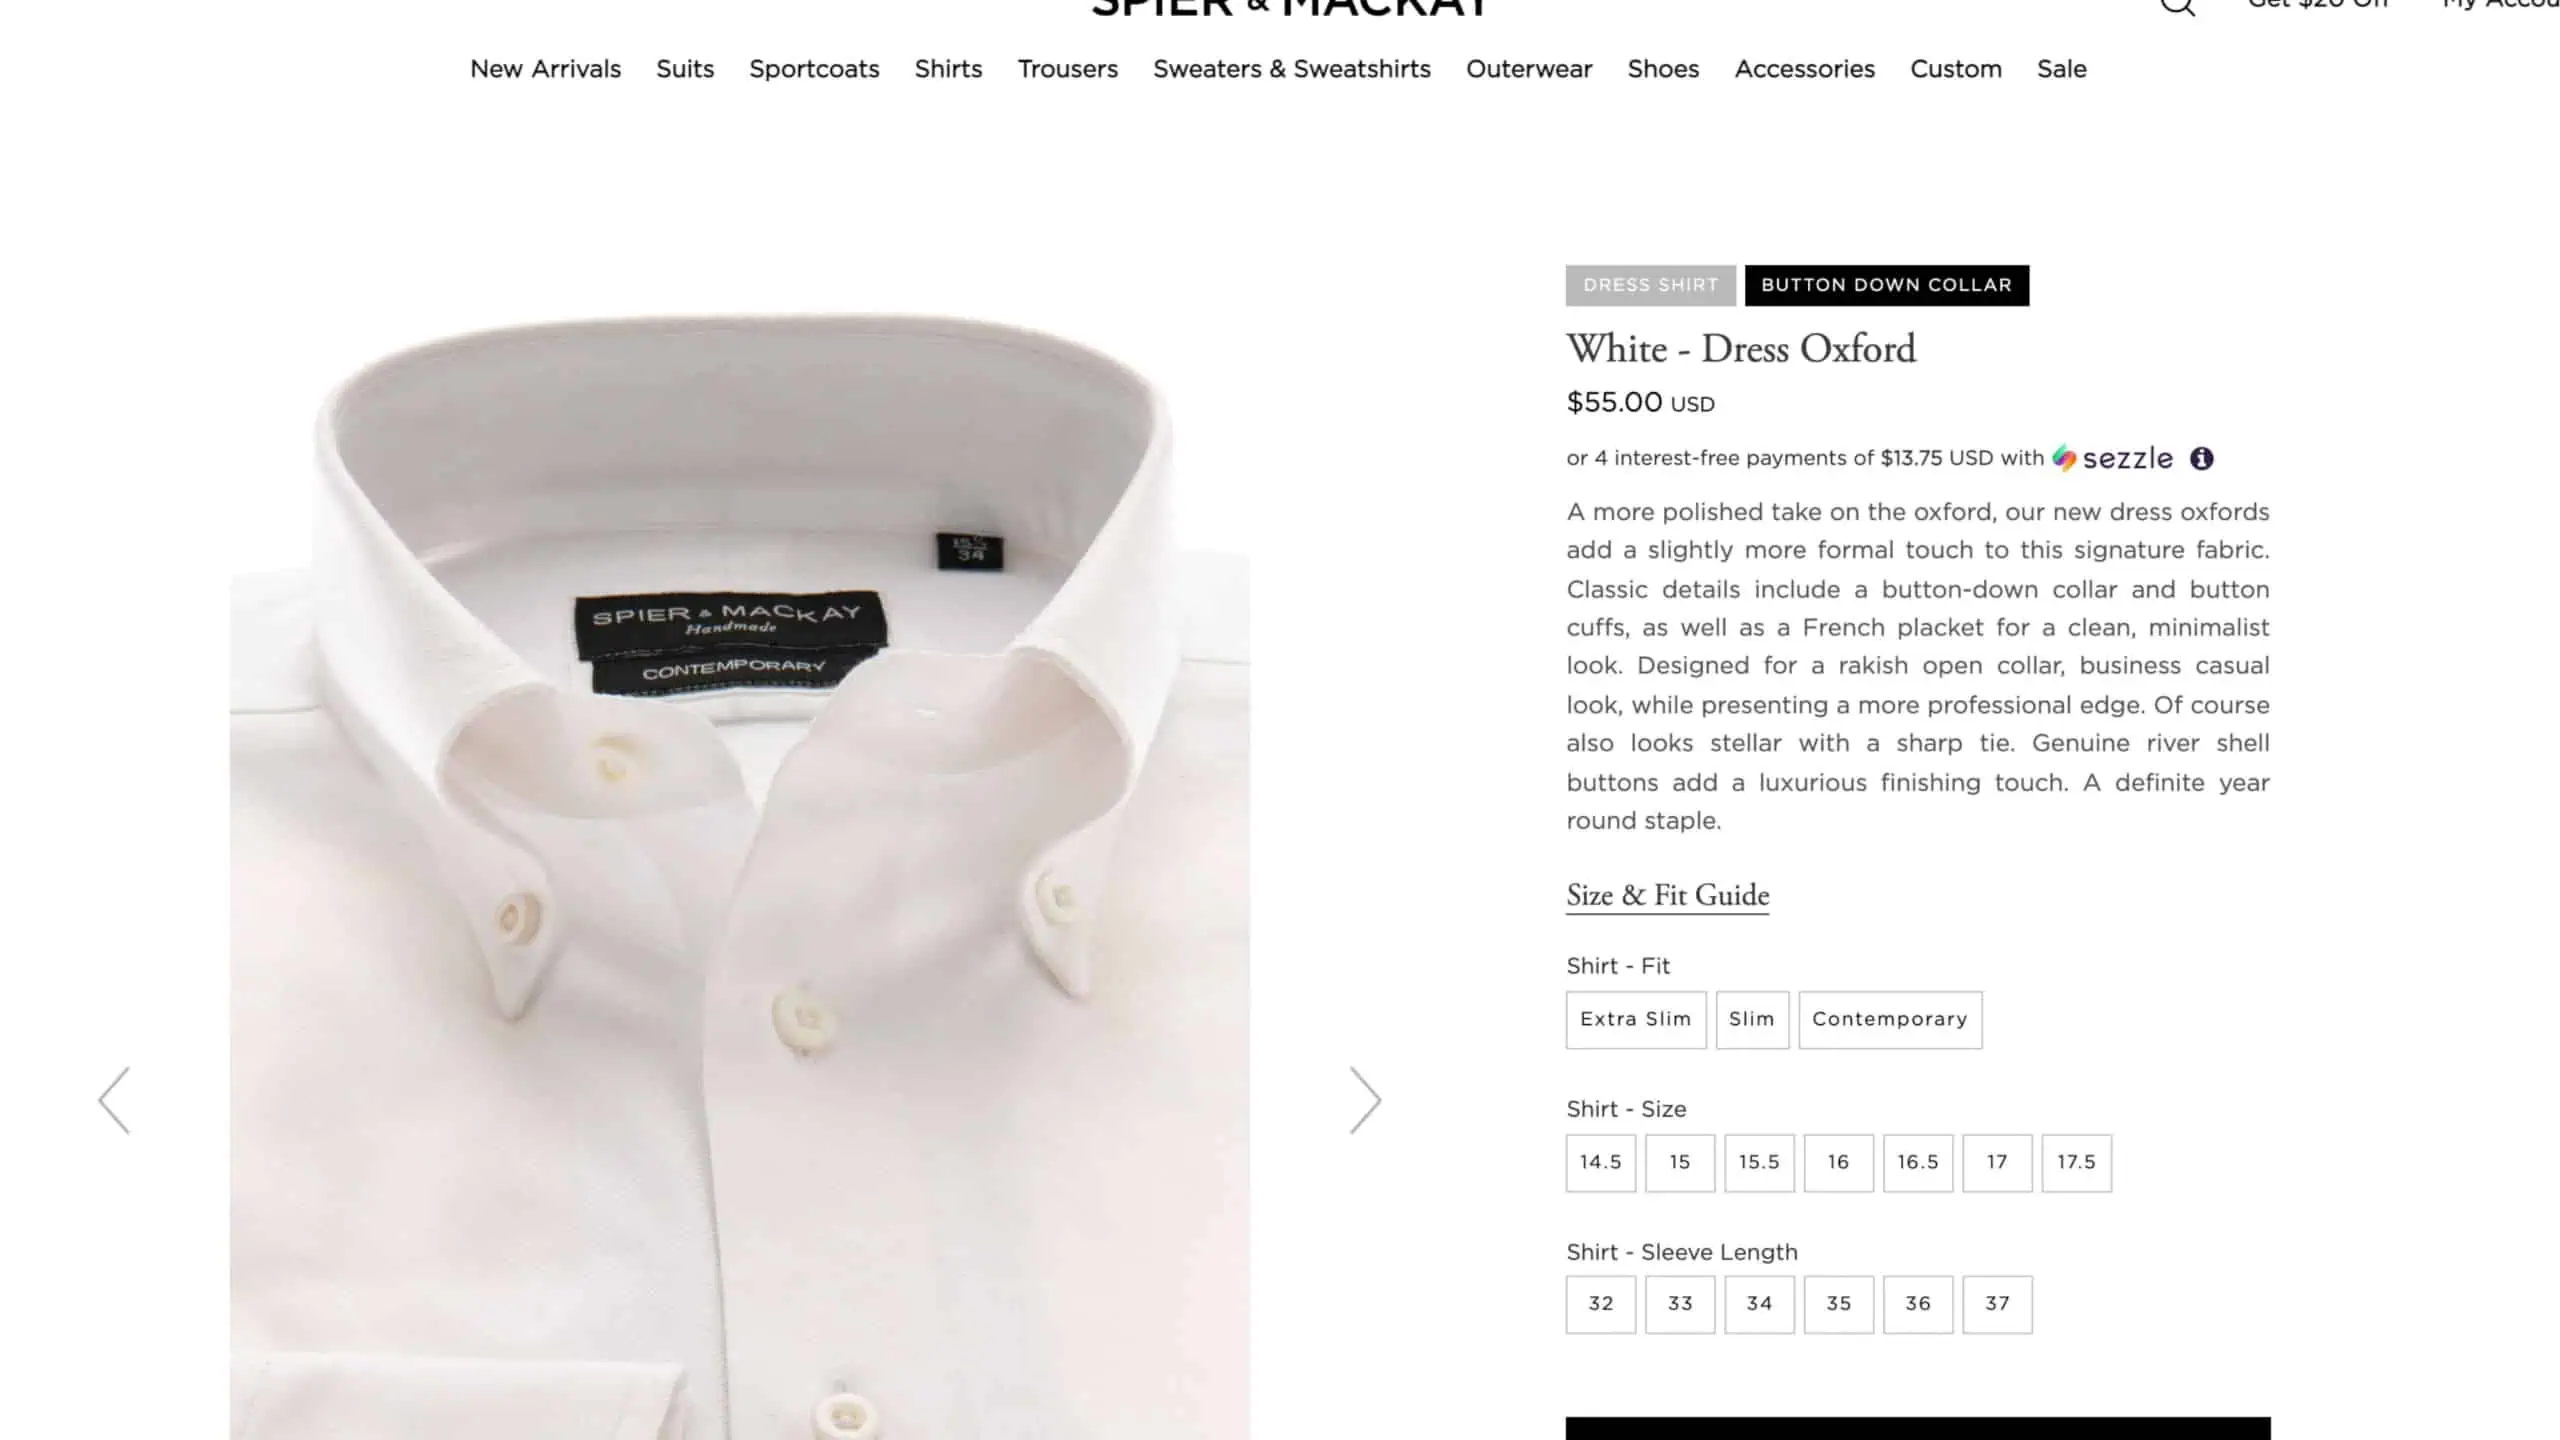 A Spier & Mackay button-down collar shirt in white.